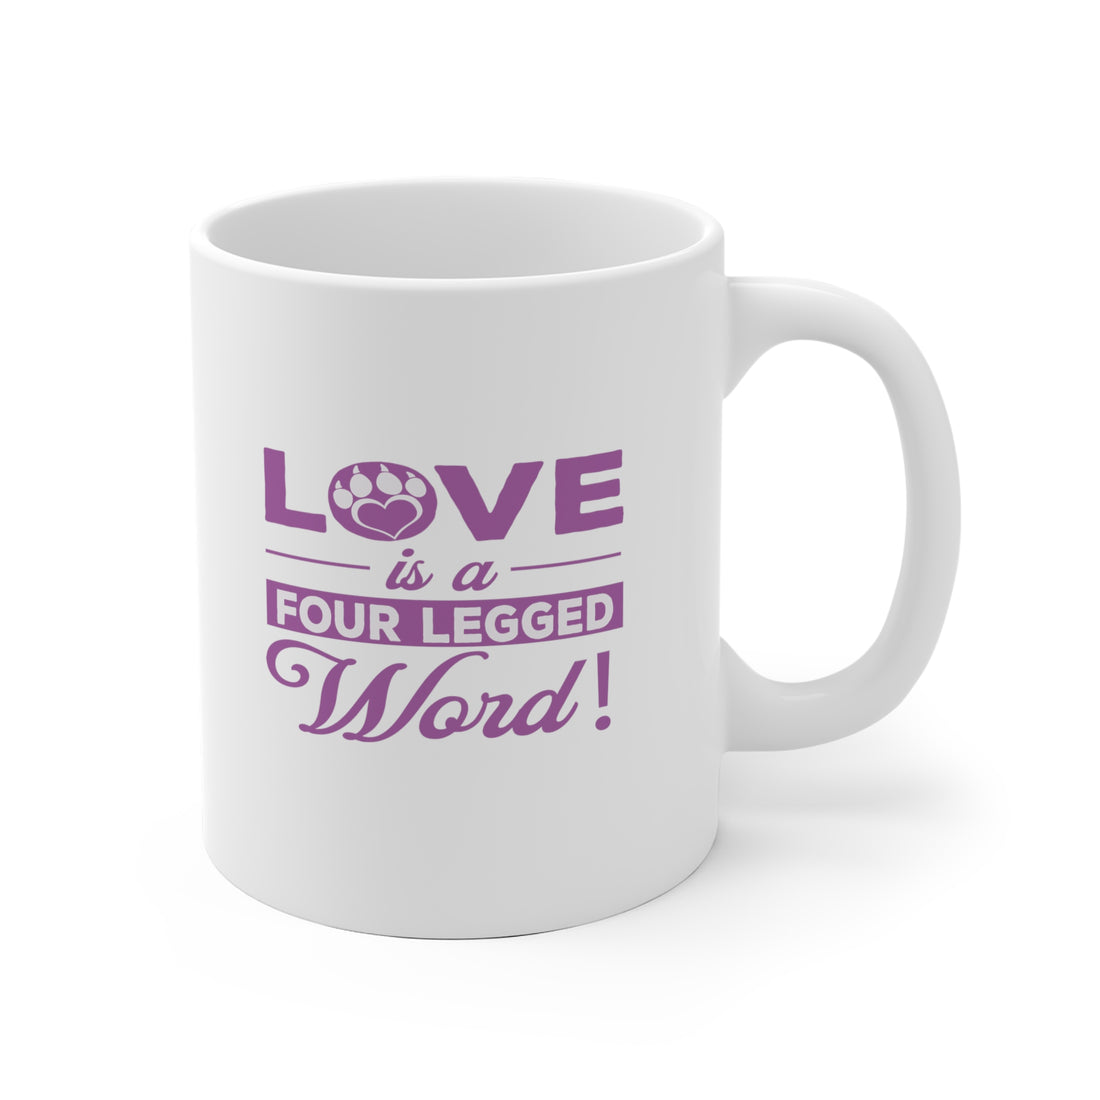 Love Is A Four Legged Word - White Ceramic Mug 2 sizes Available